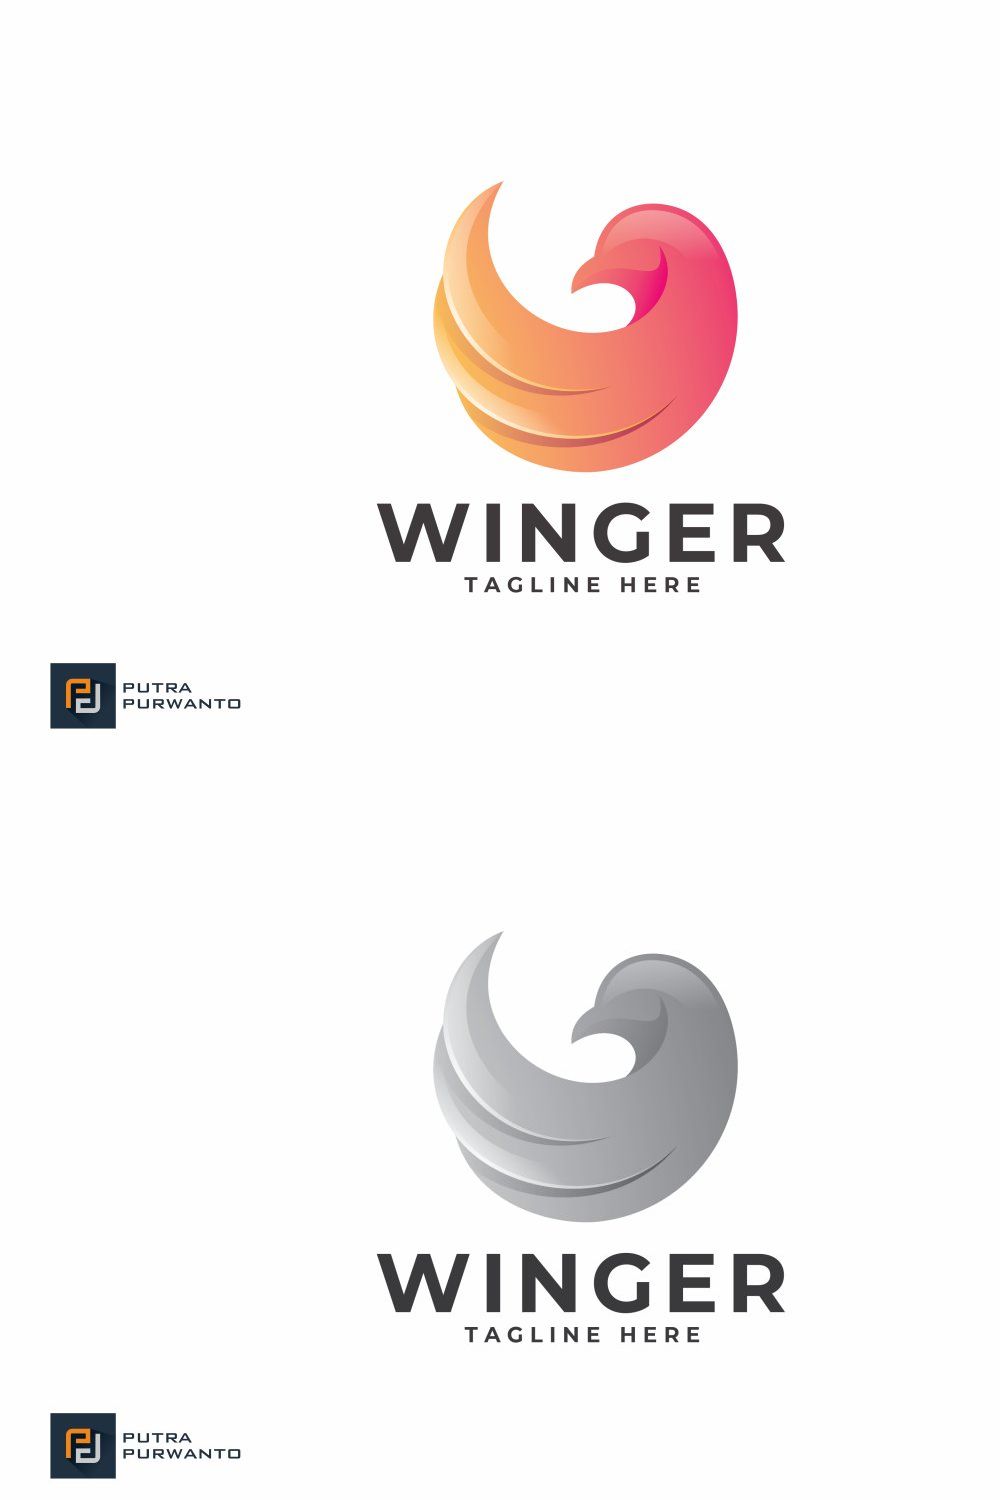 Winger - Logo Template pinterest preview image.